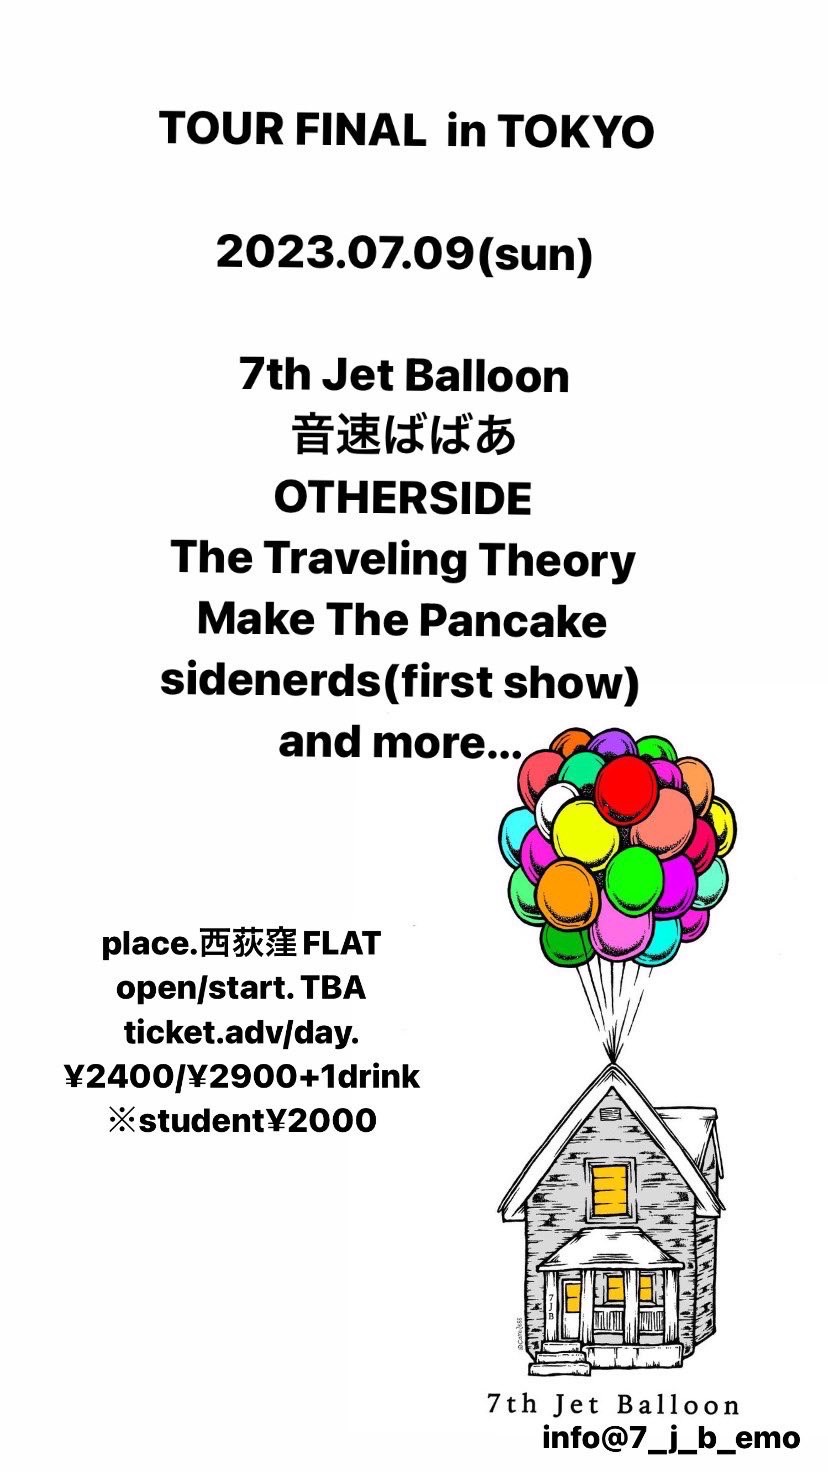 7th Jet Balloon presents TOUR FINAL in TOKYO